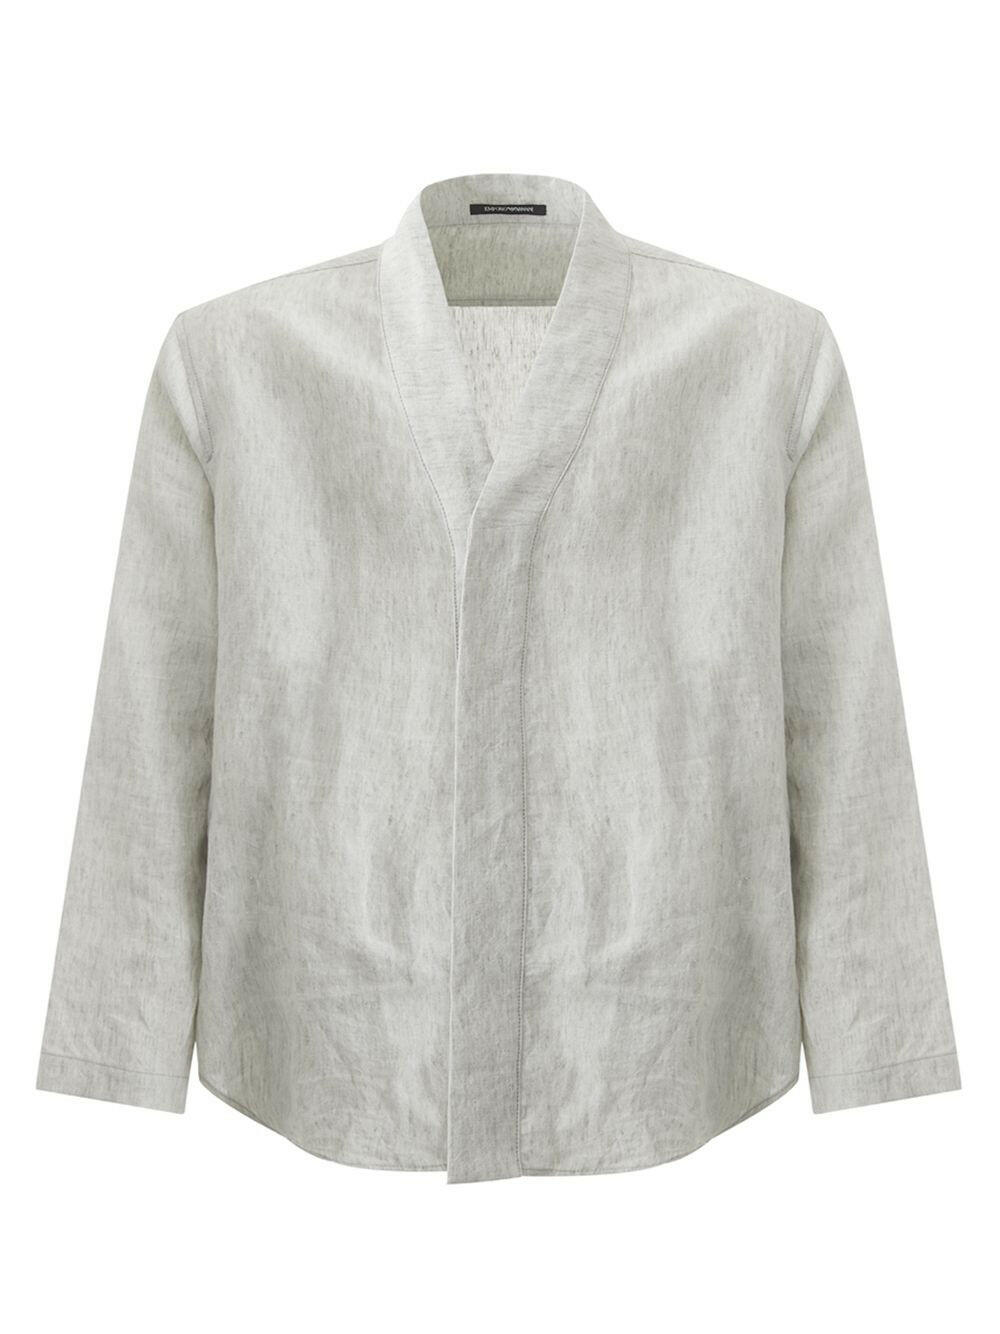 Emporio Armani Linen Overshirt in Grey - GENUINE AUTHENTIC BRAND LLC  